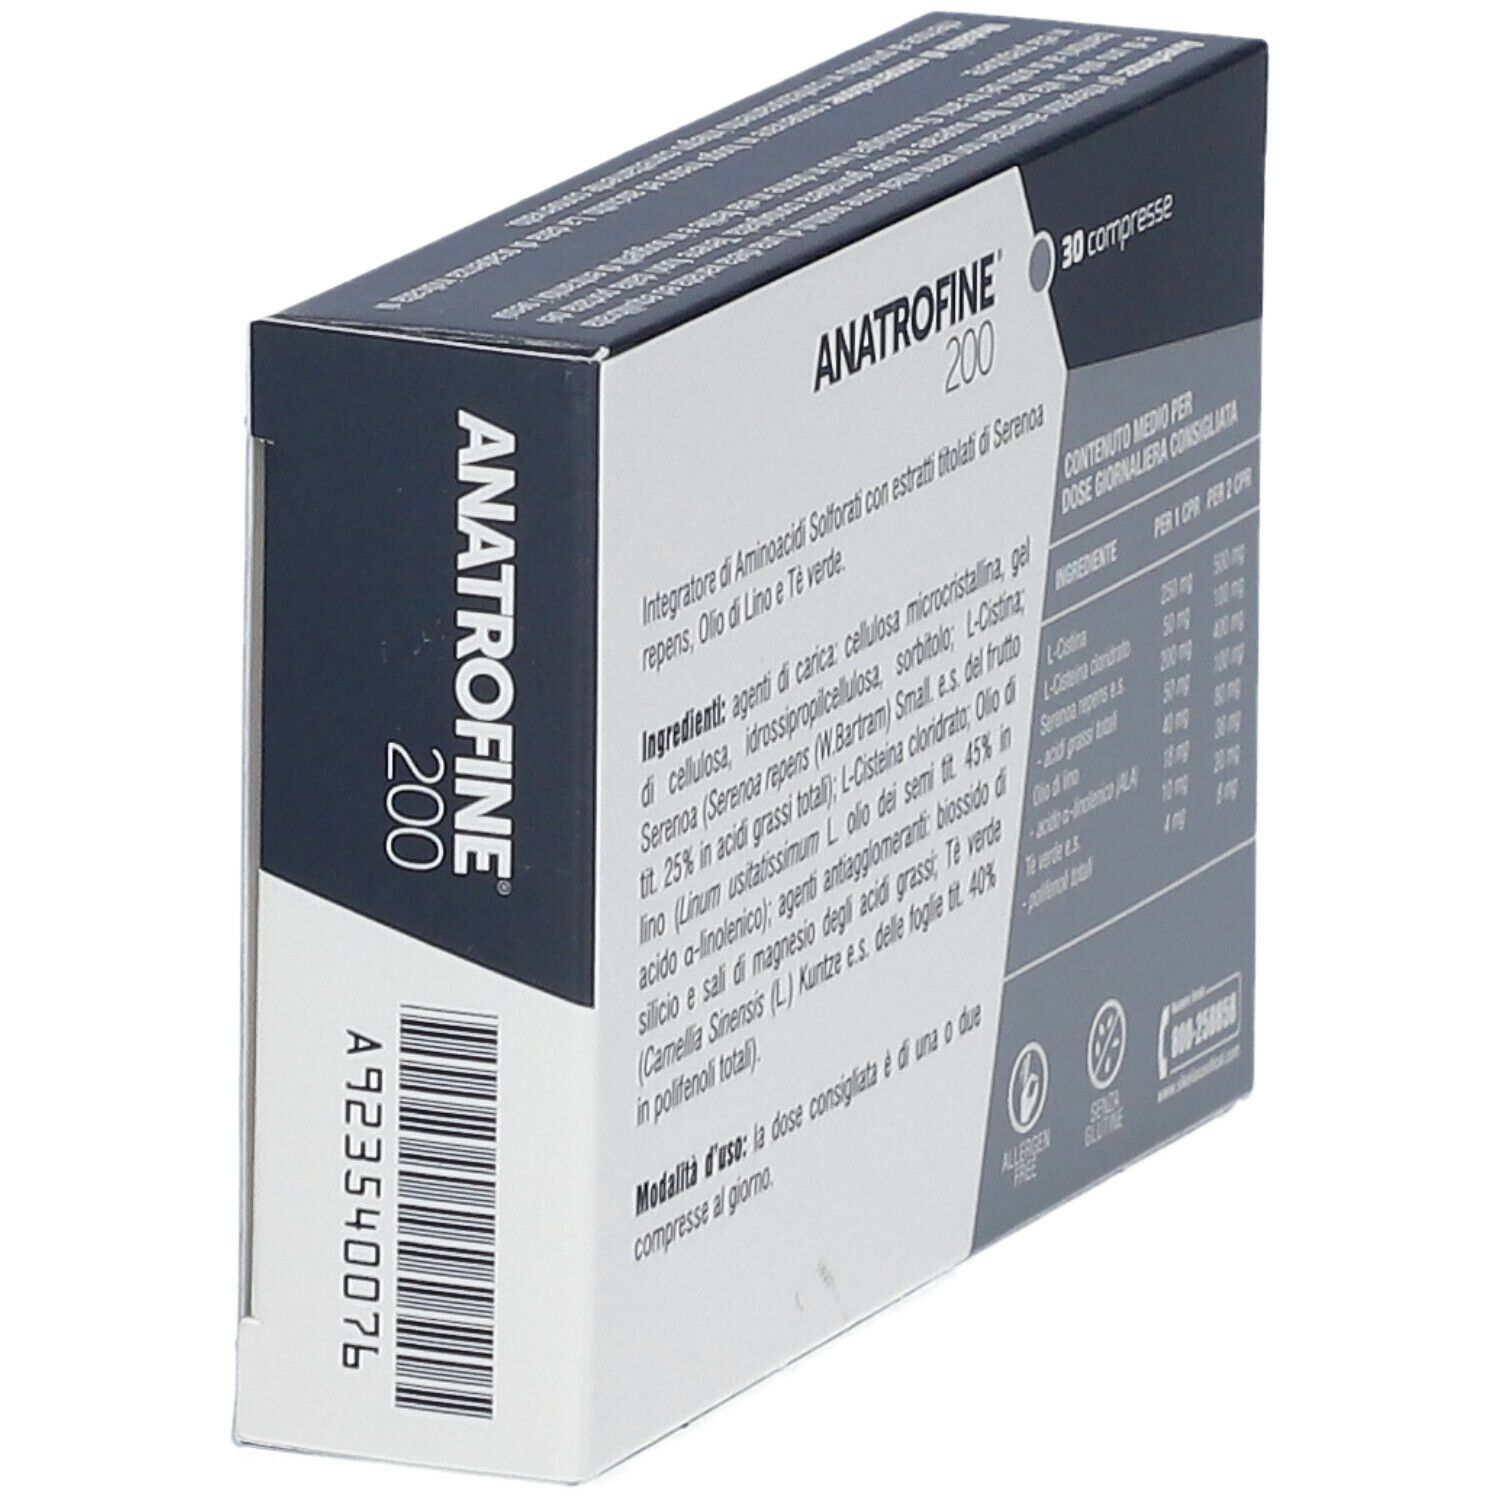 ANATROFINE® 200